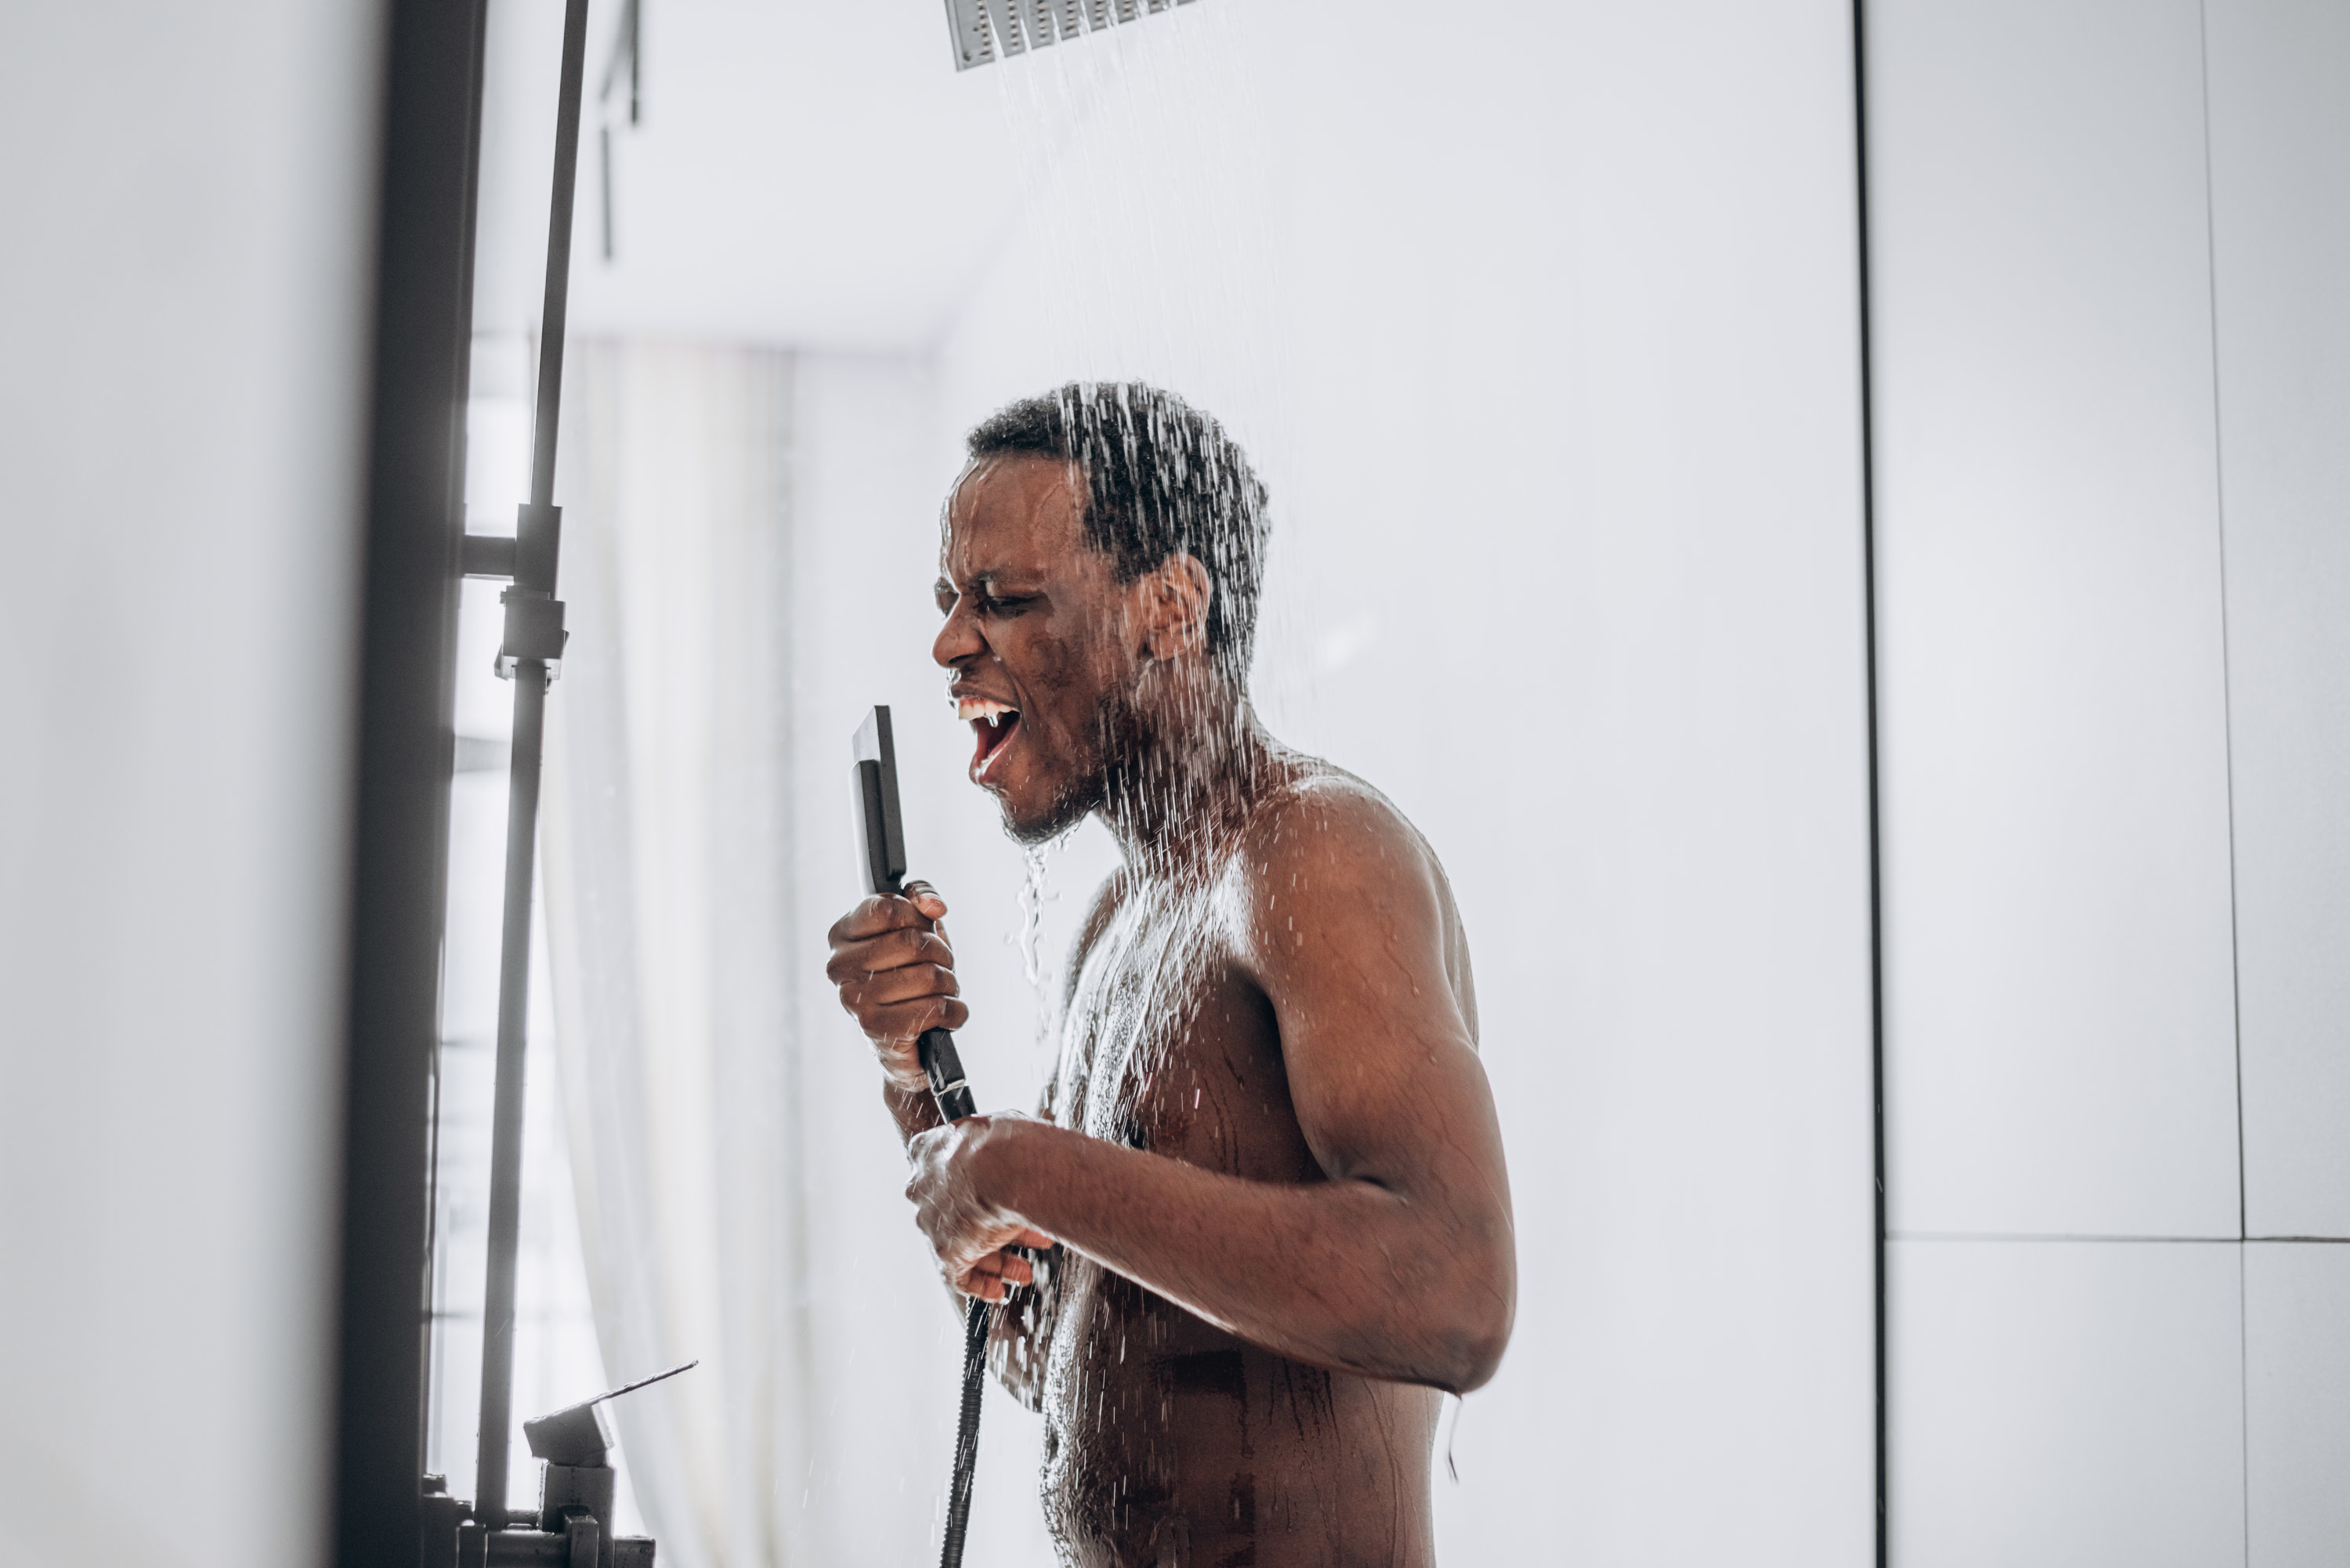 Man sings in the shower